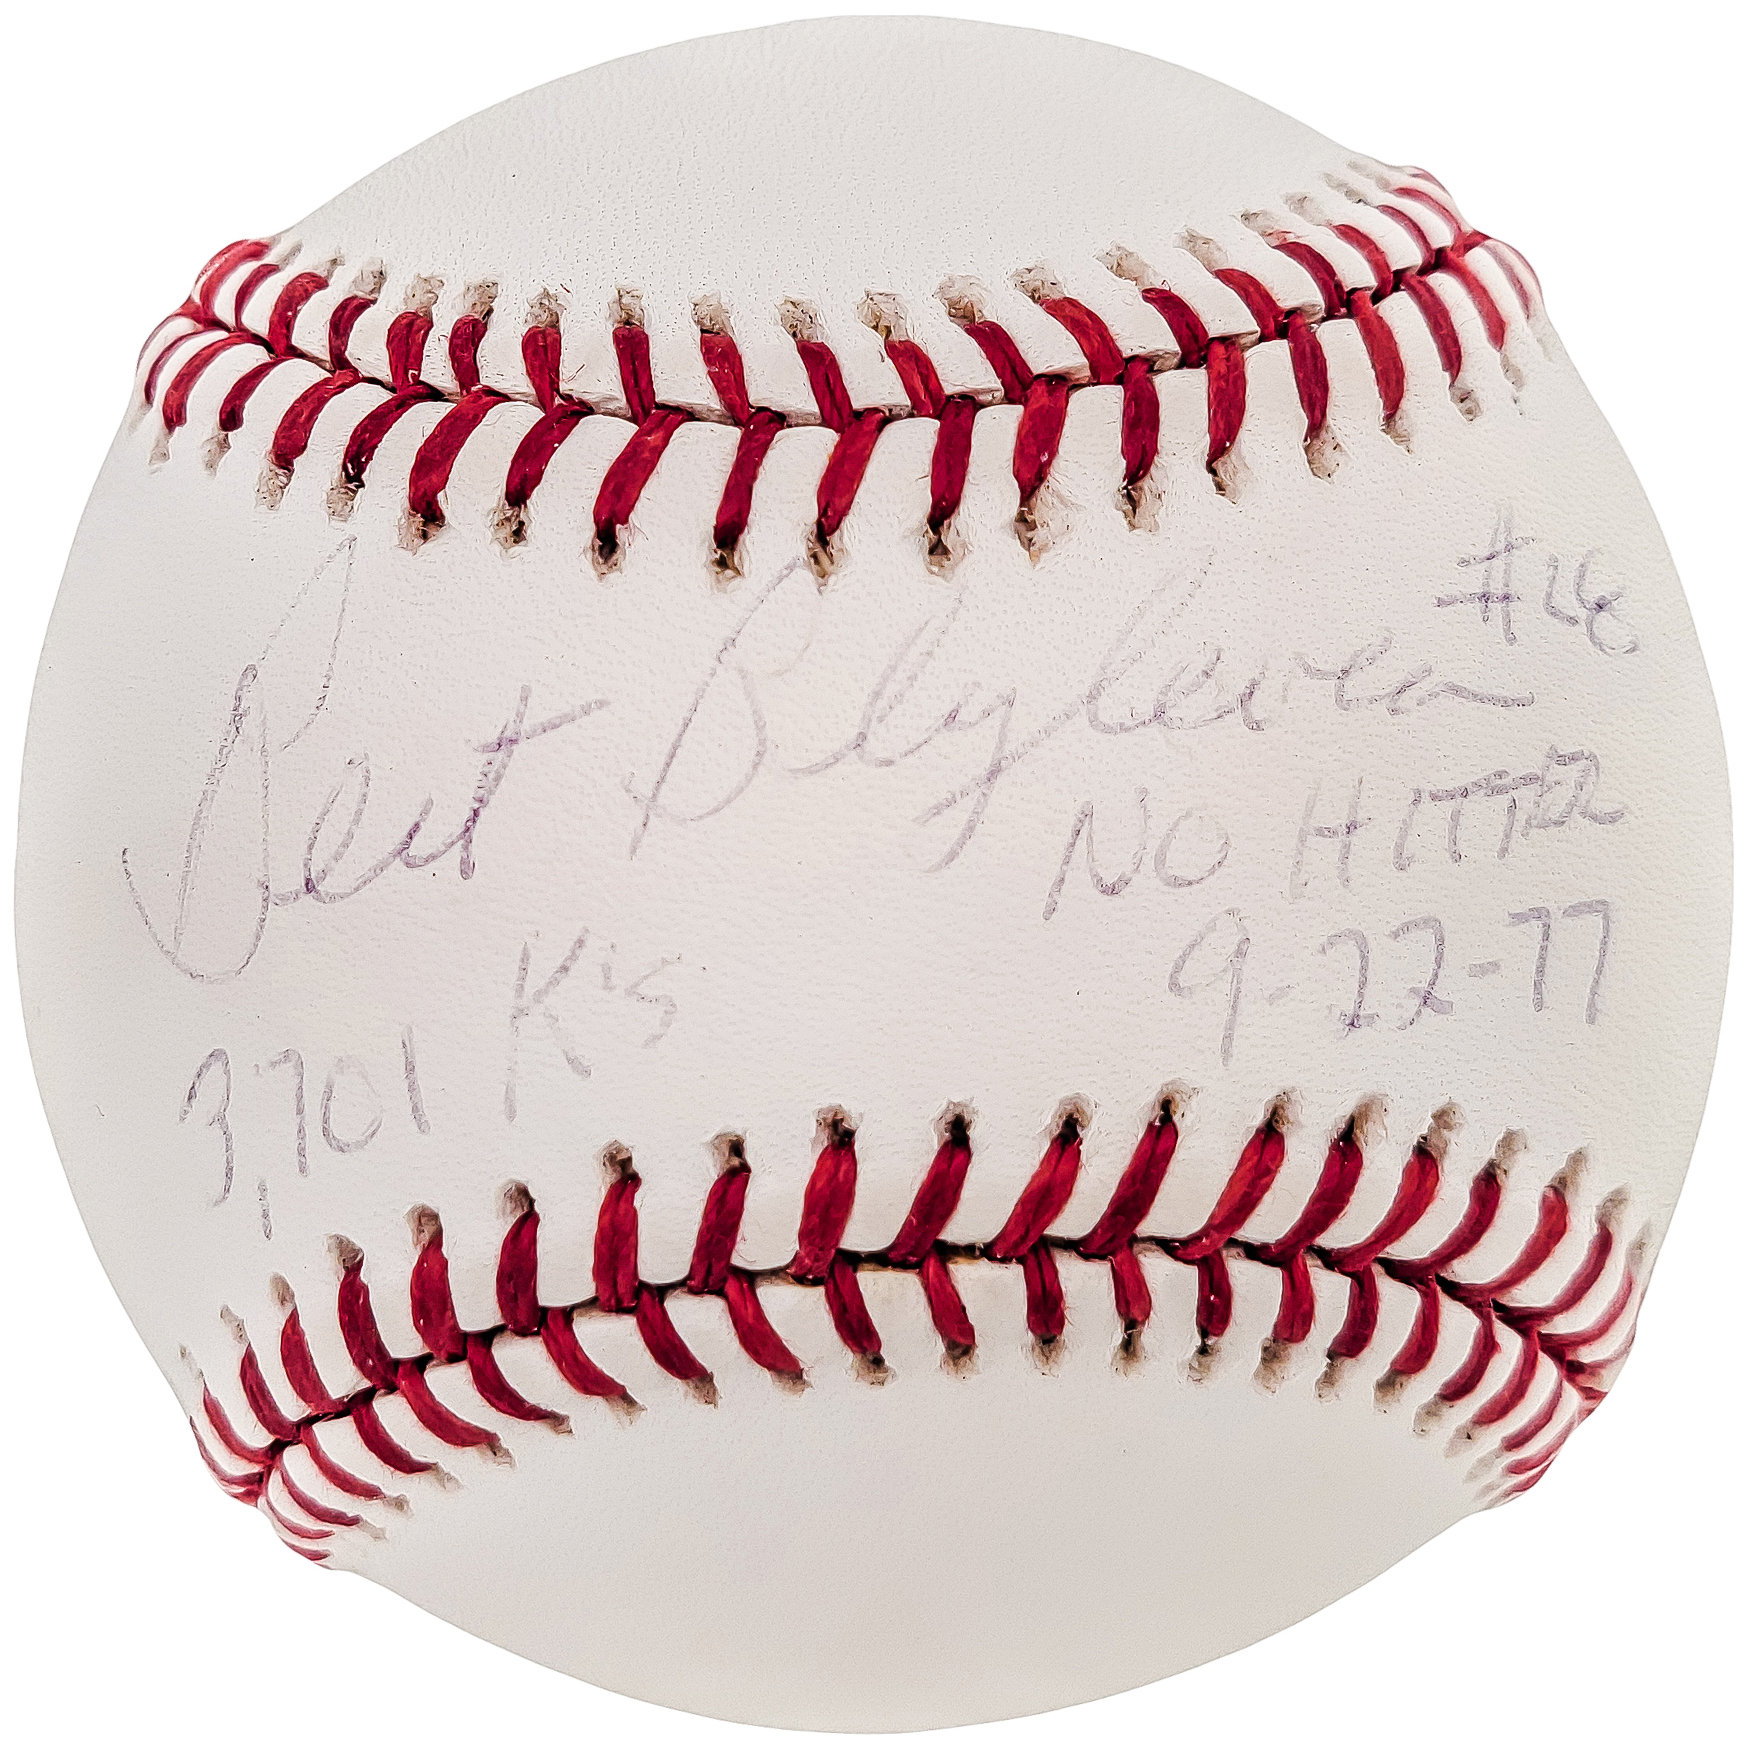 Bert Blyleven Autographed HOF 2011 Baseball